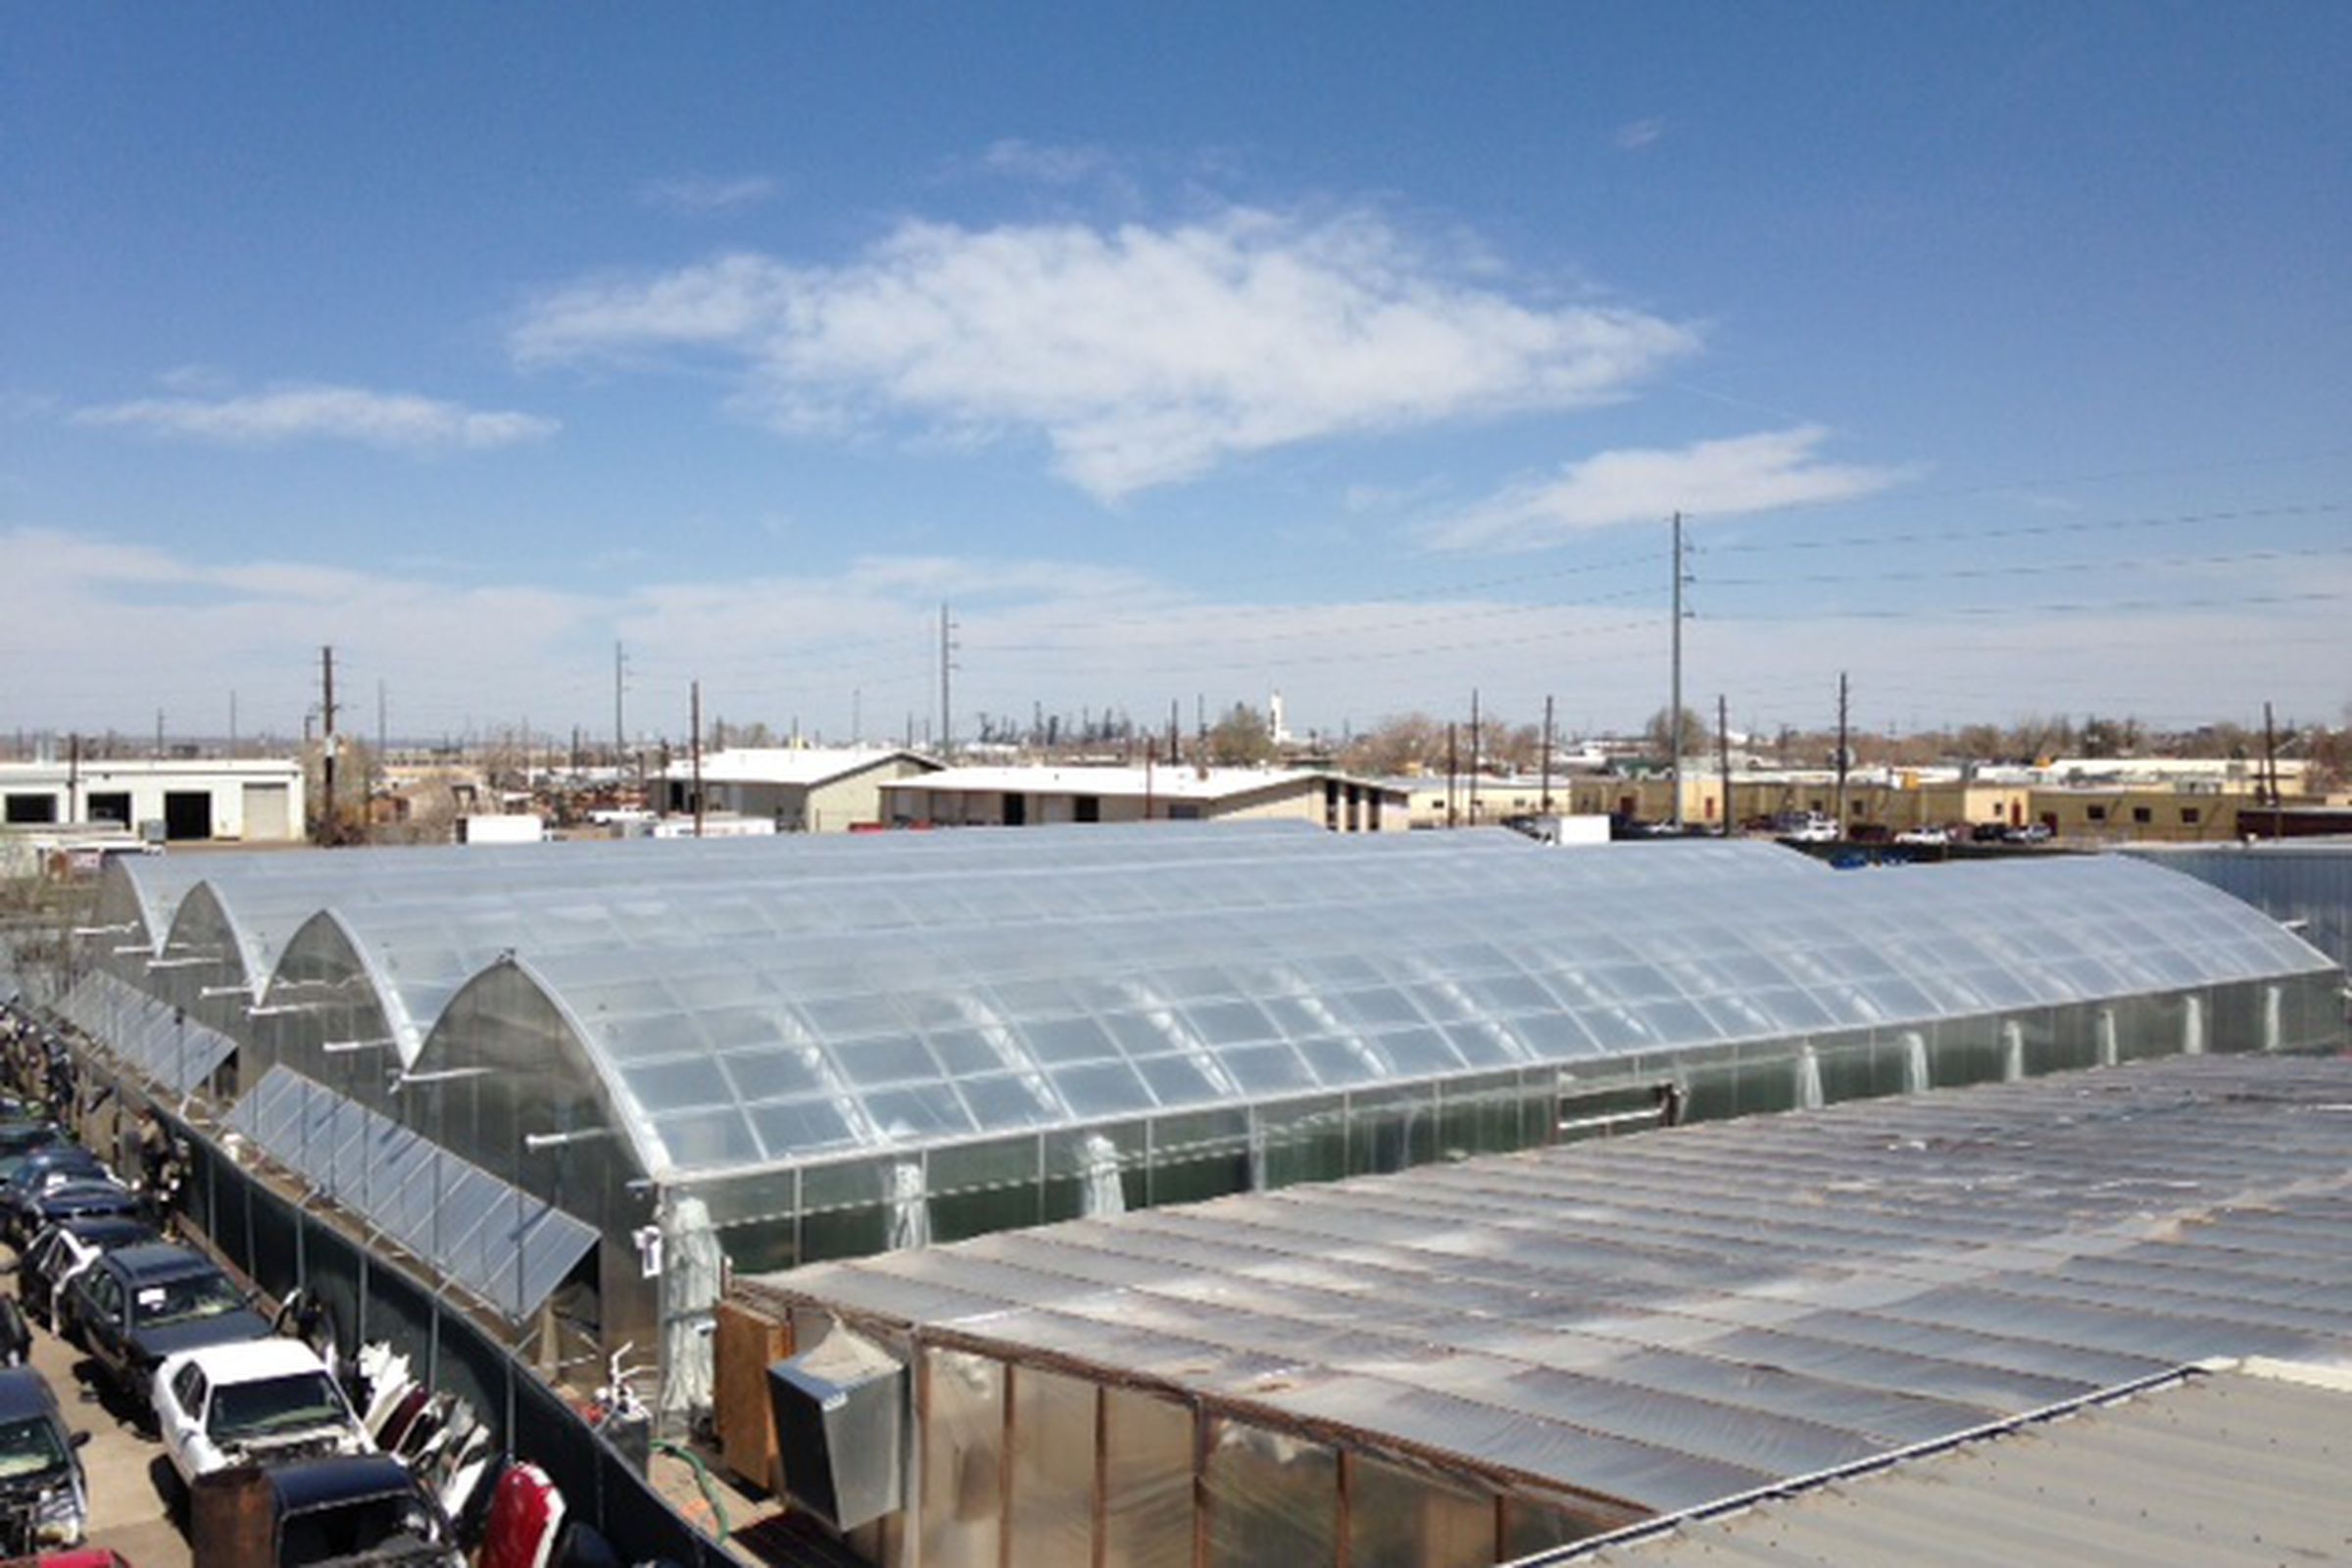 RiverRock's massive marijuana growing greenhouse